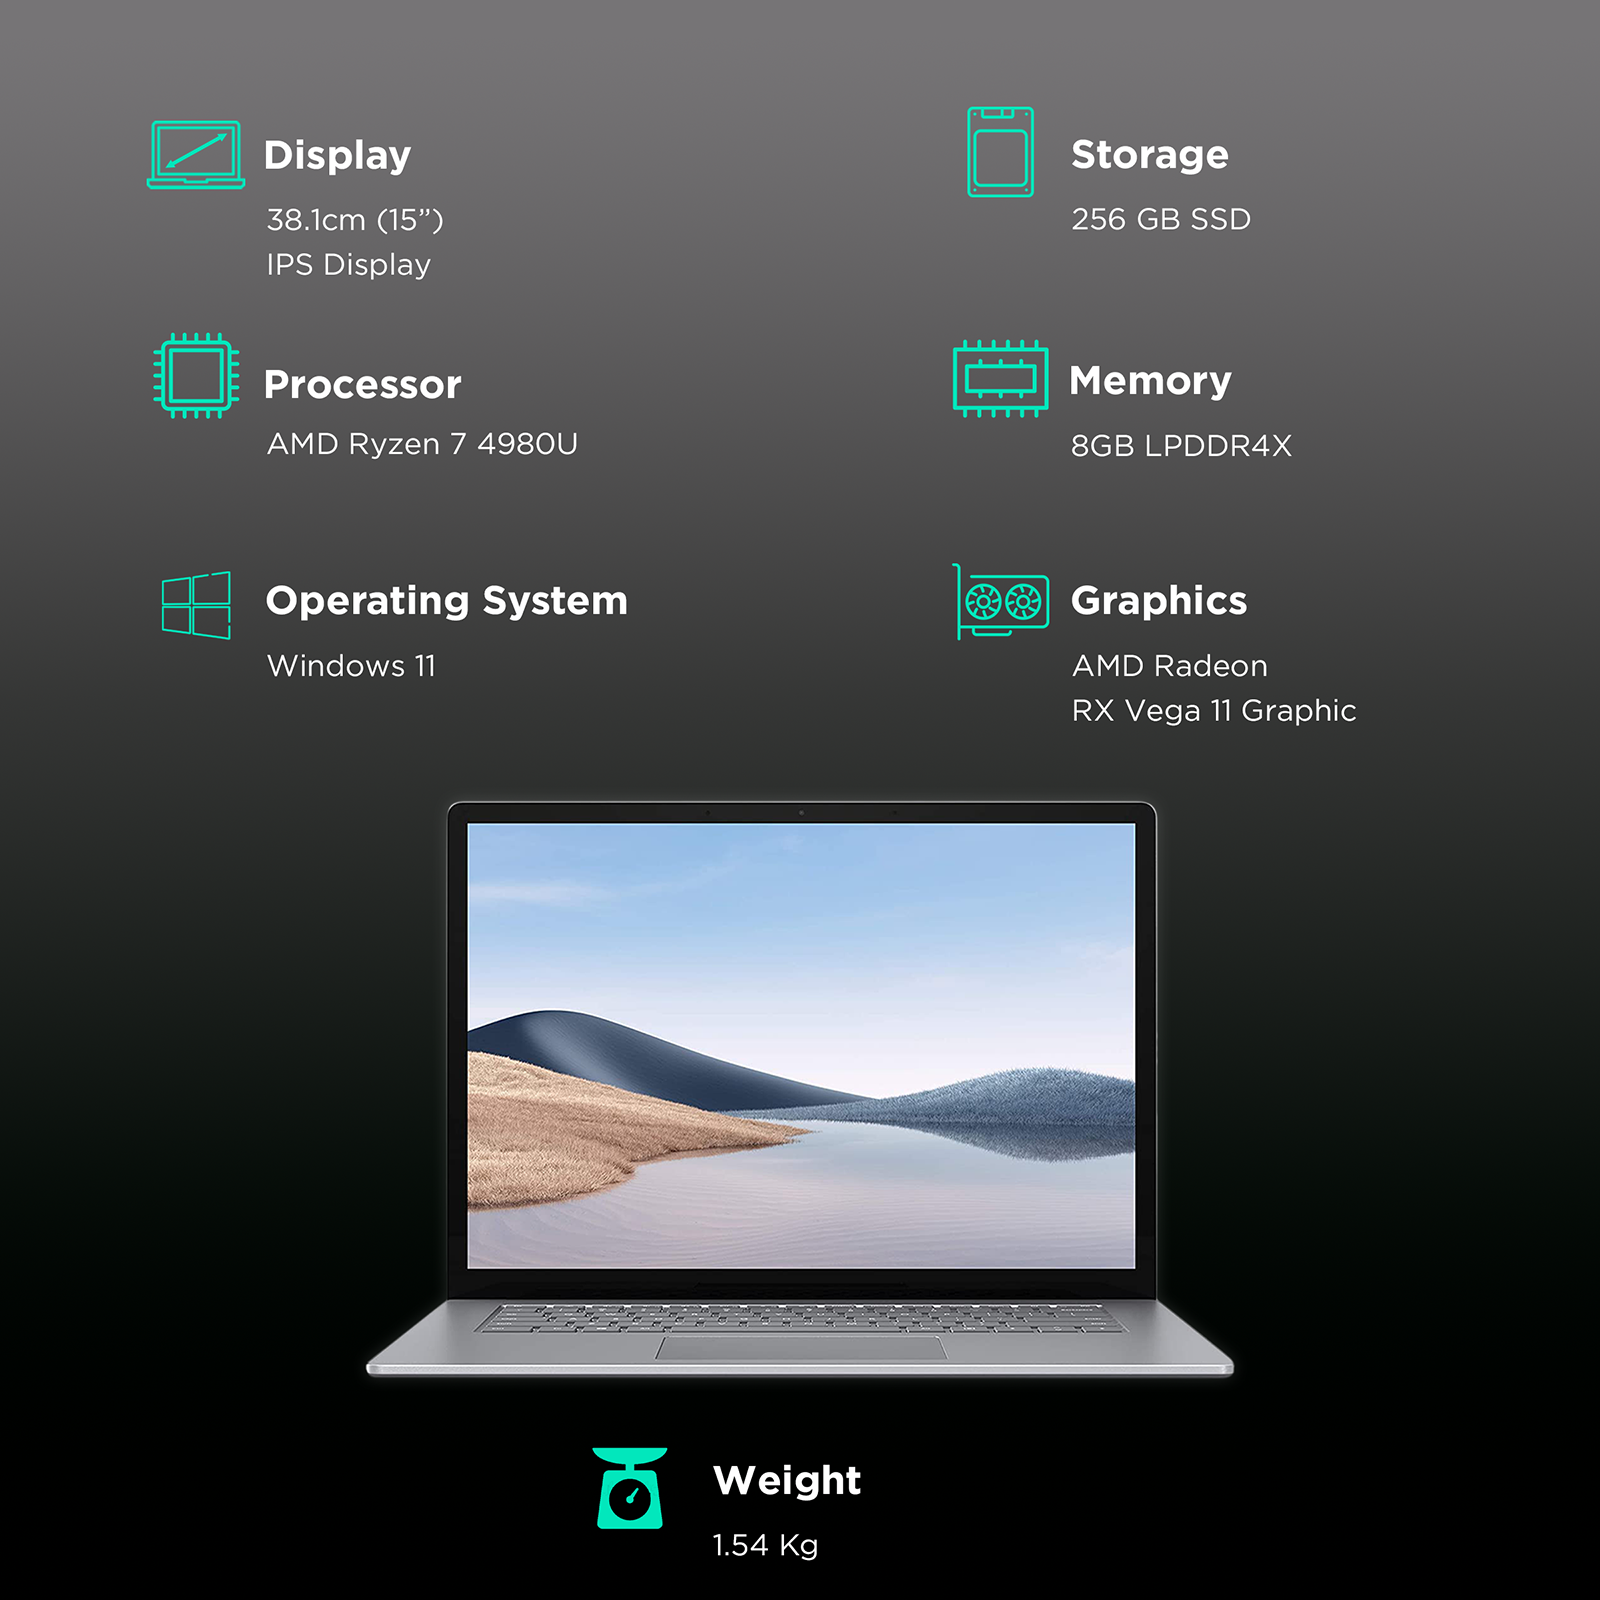 Microsoft Laptop 4 - 15 inches Screen, AMD R7/Windows 10 Home/8GB RAM/256  GB SSD/ Platinum - (5UI-00049)